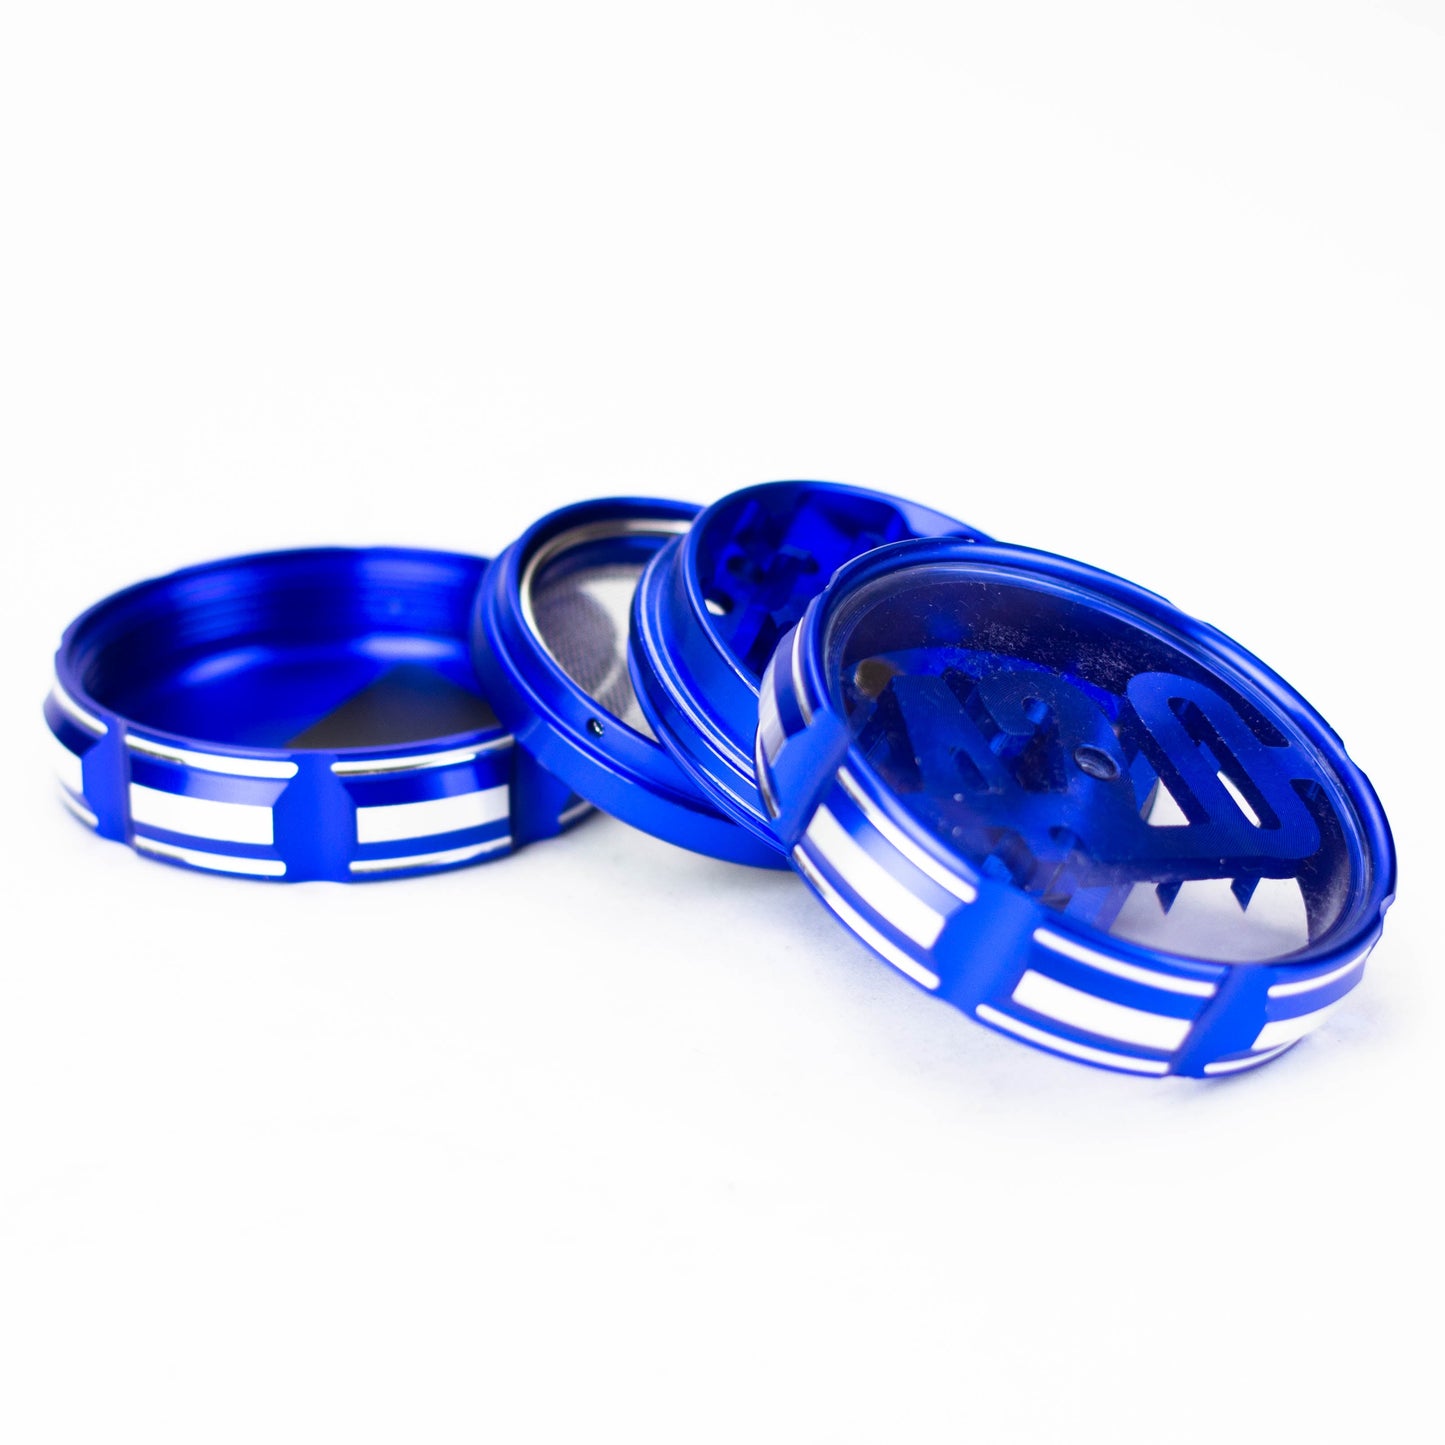 4 Parts 420 Aluminum Grinder-Blue [CNC6404-420]_1